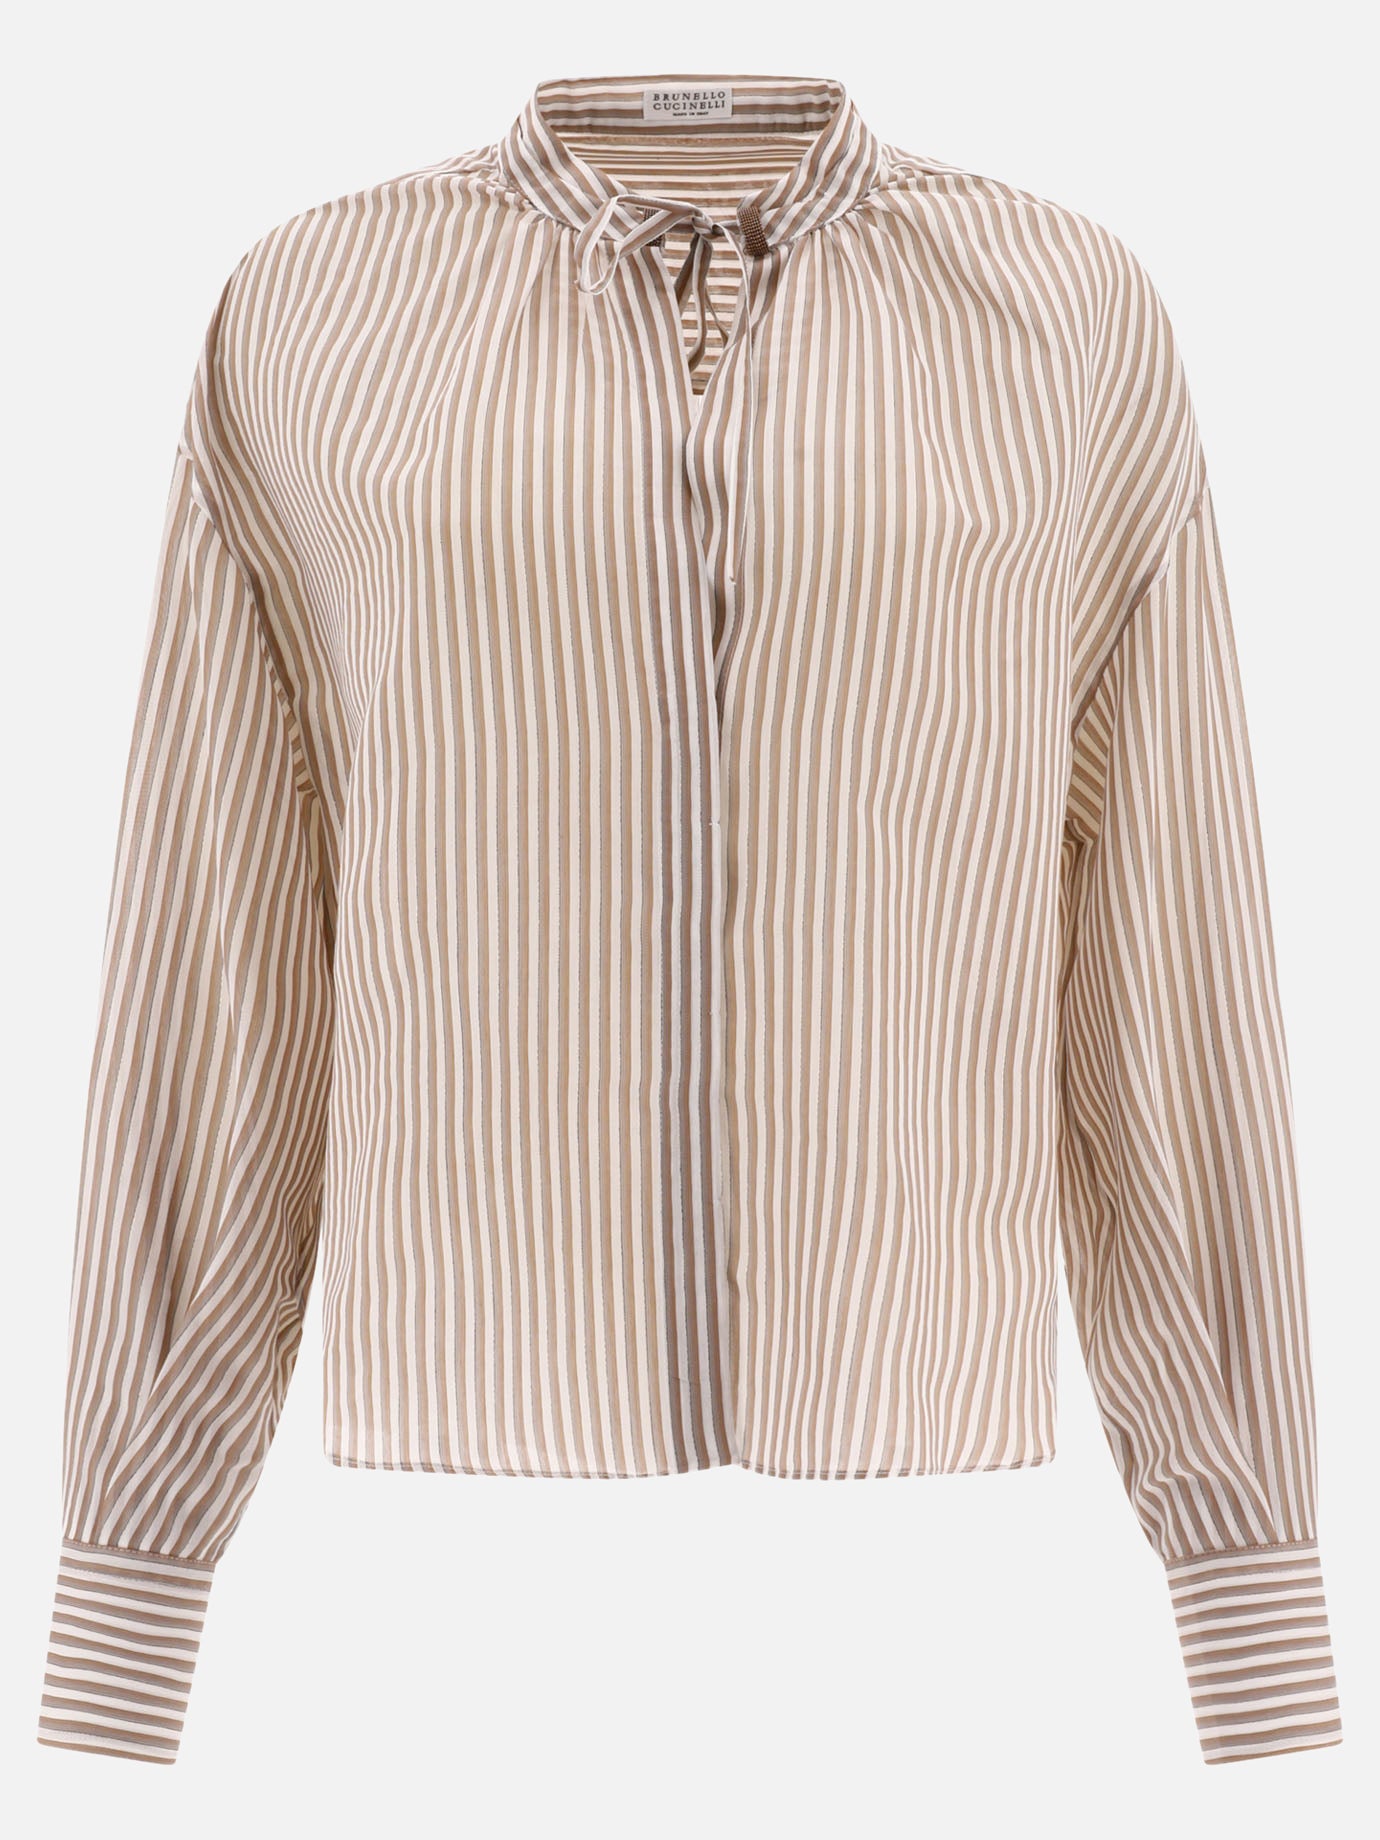 "Sparkling Stripe" blouse